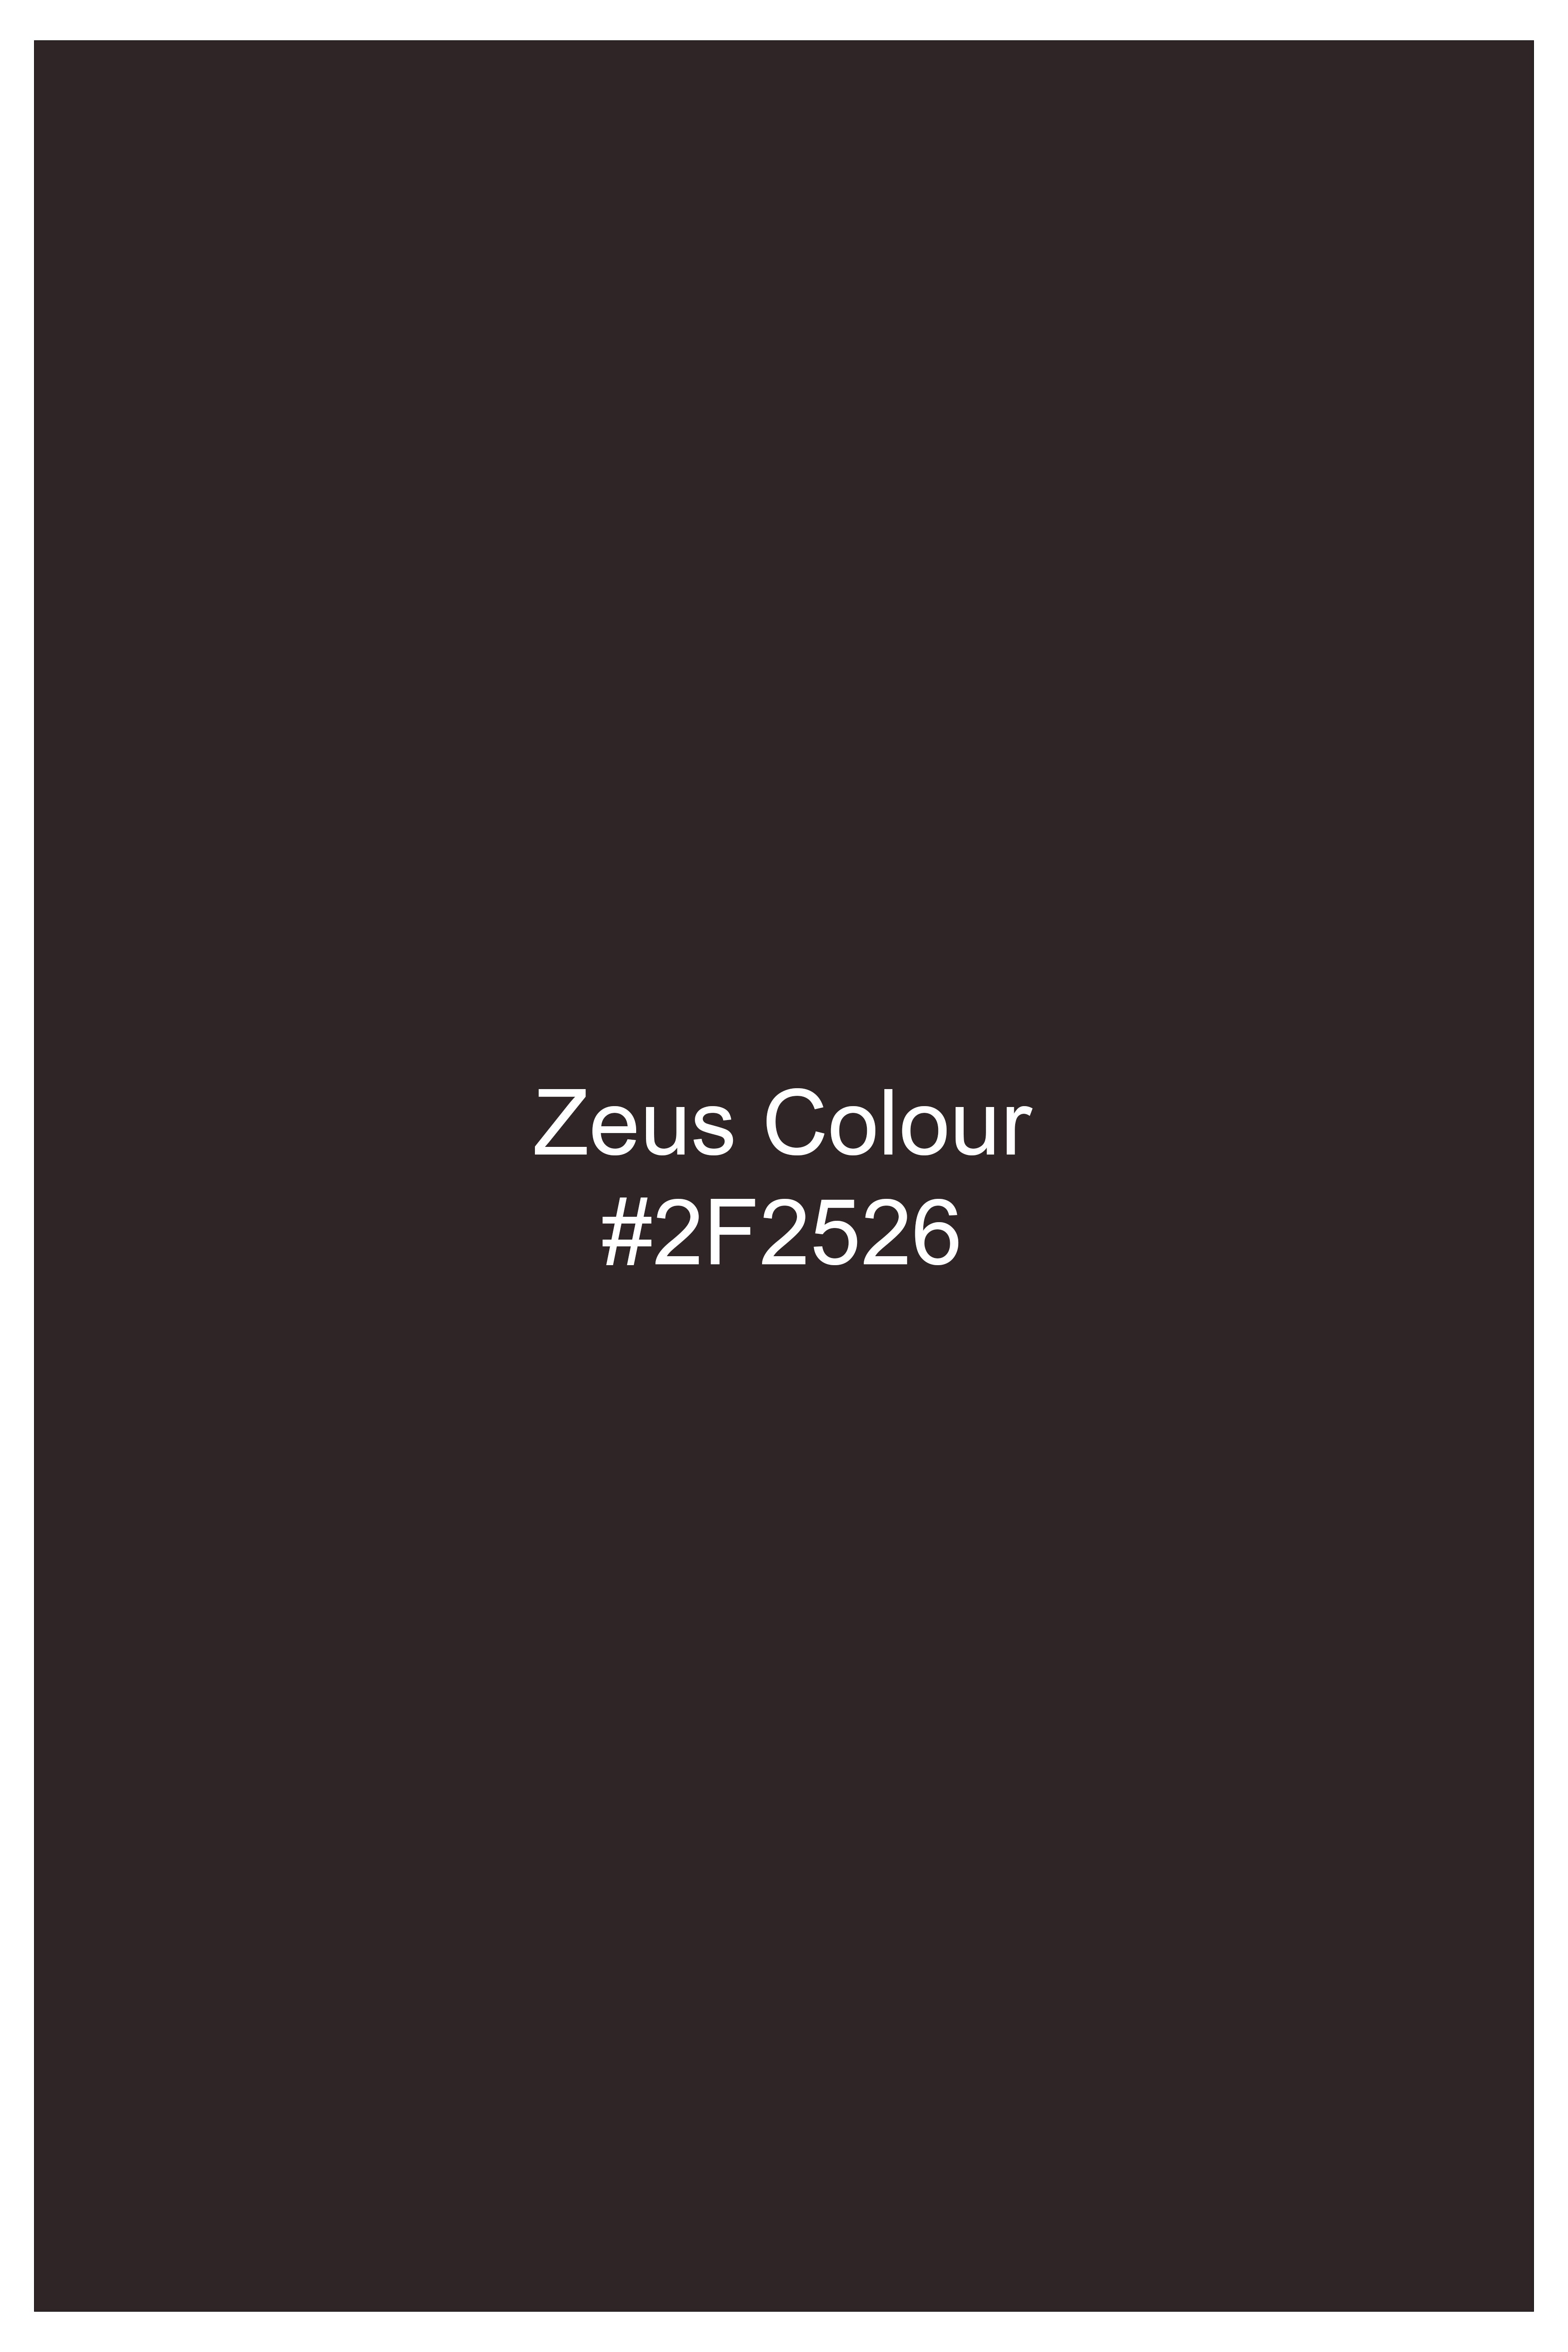 Zeus Brown Dobby Textured Wool Blend Suit